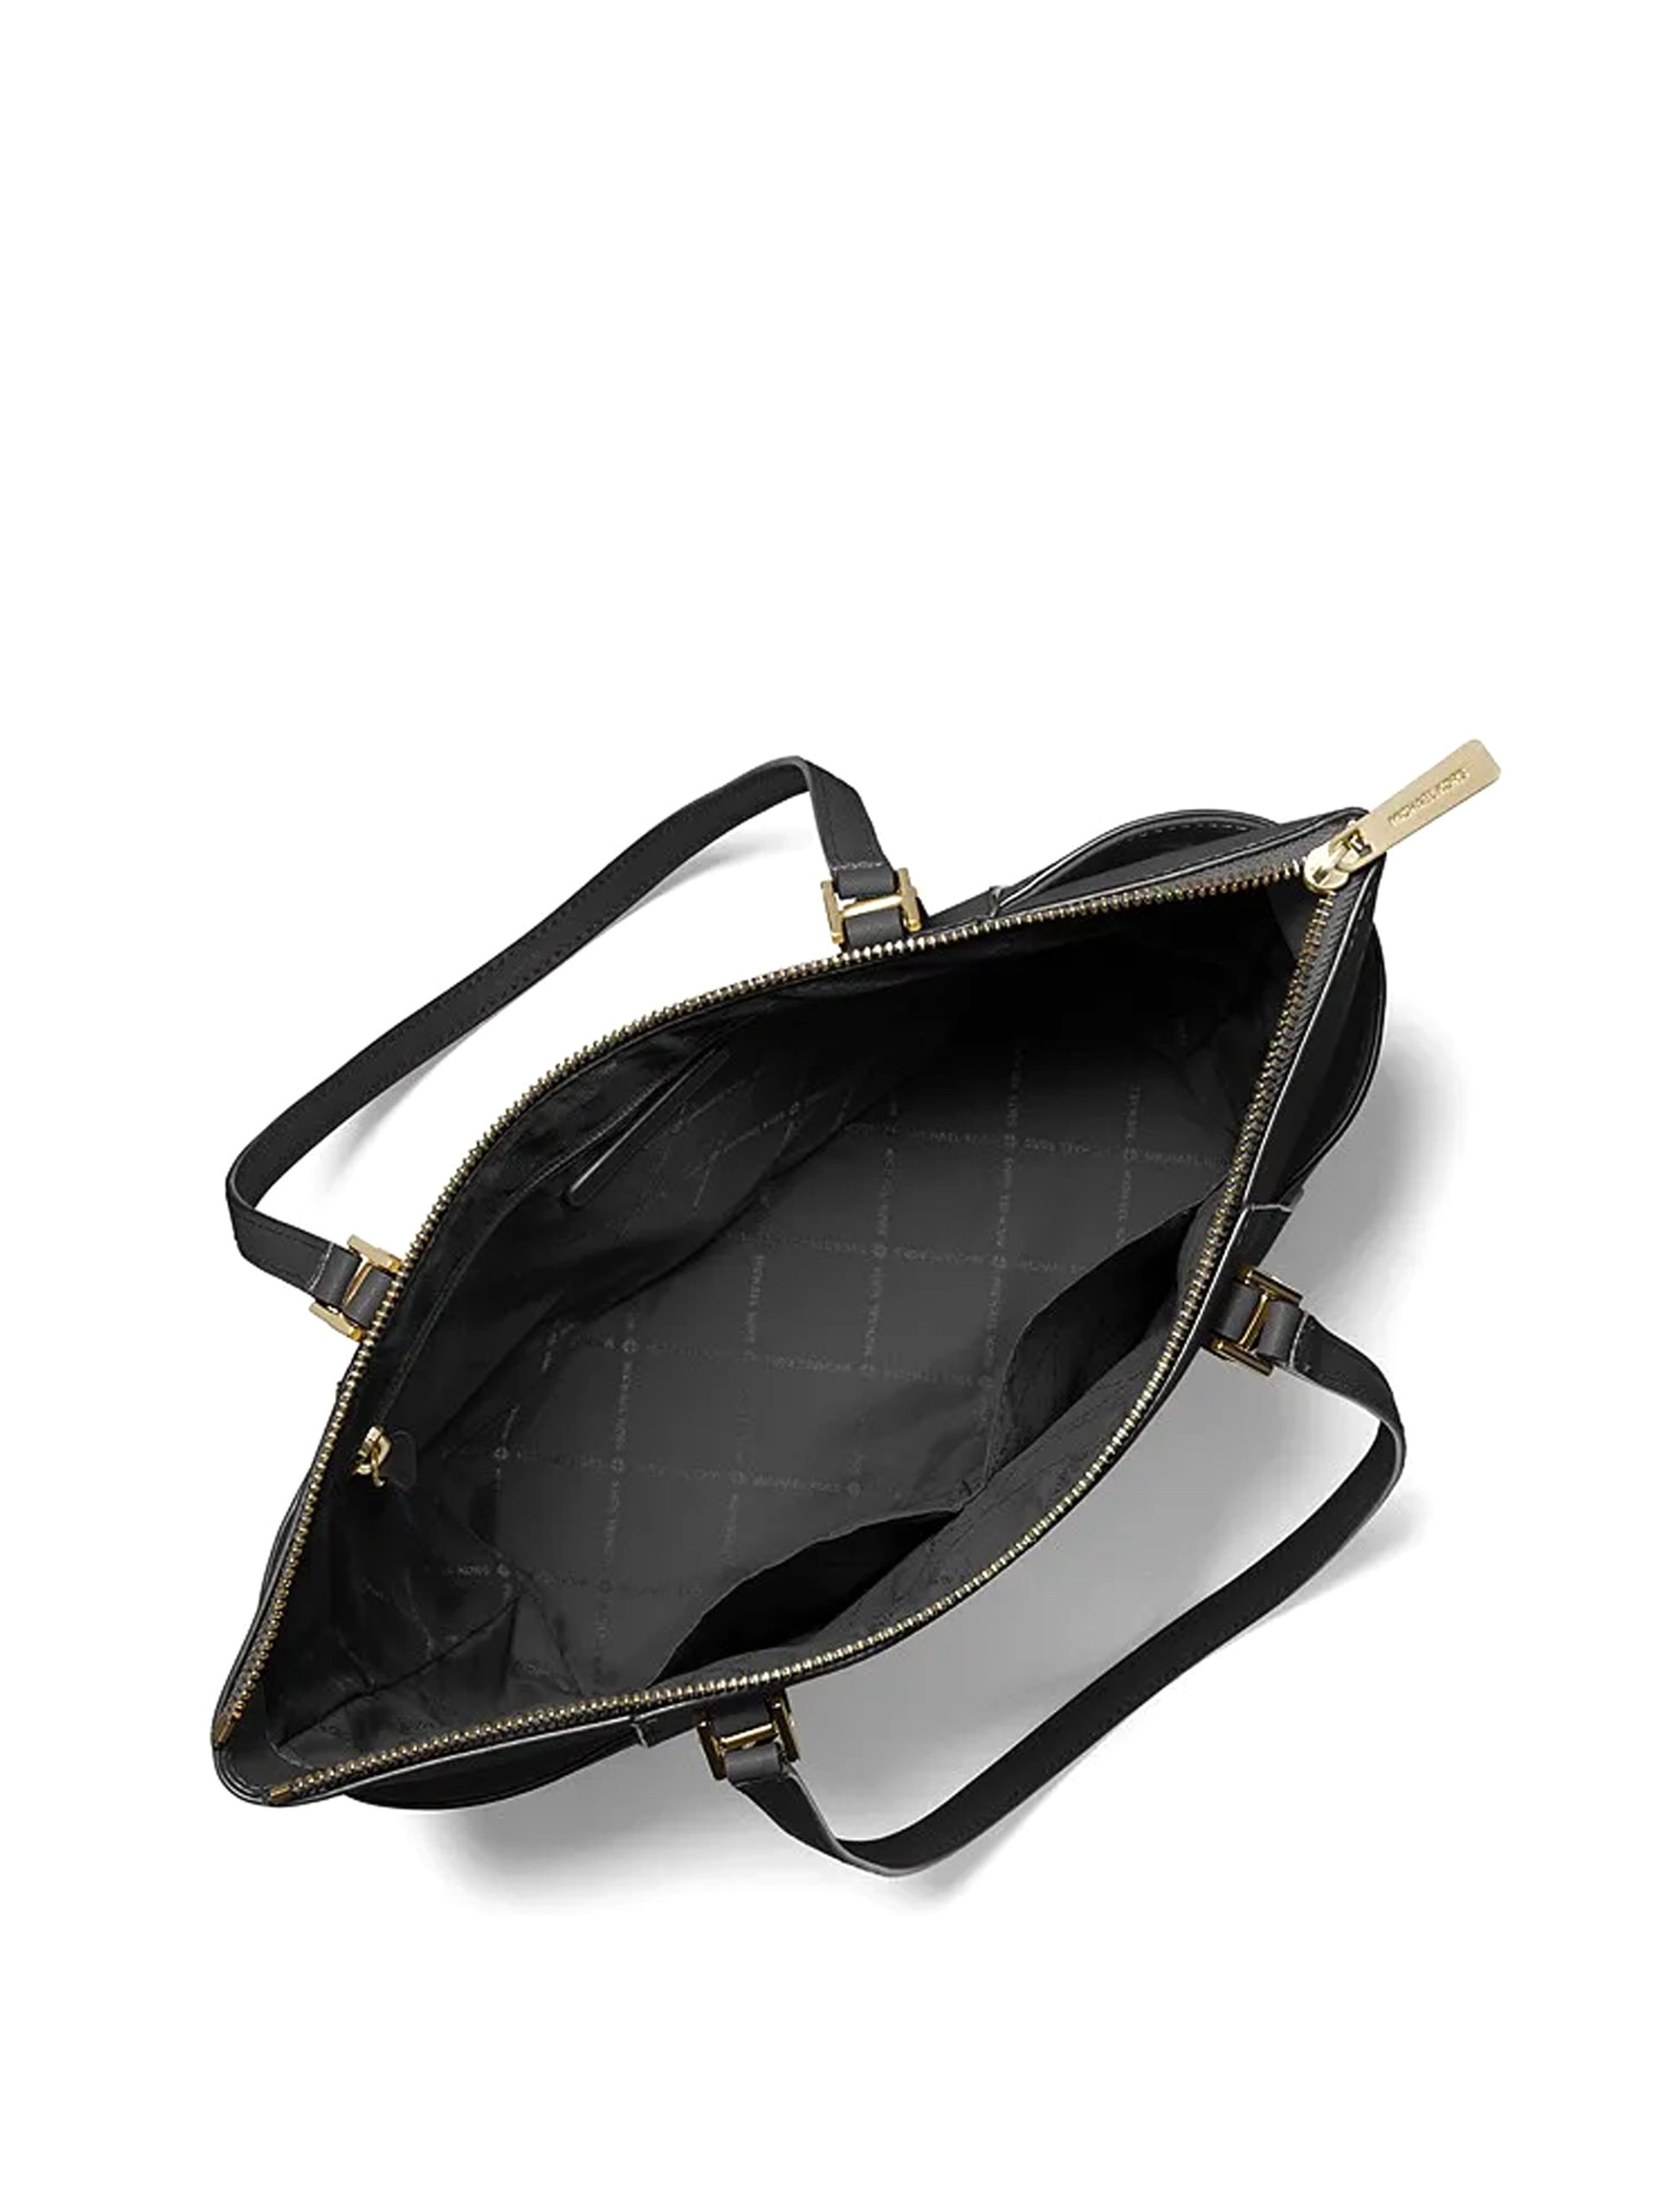 Michael Kors Bags | Michael Kors Charlotte Large Top Zip Tote Bag | Color: Black/Gold | Size: Os | Shopmyclothesss's Closet